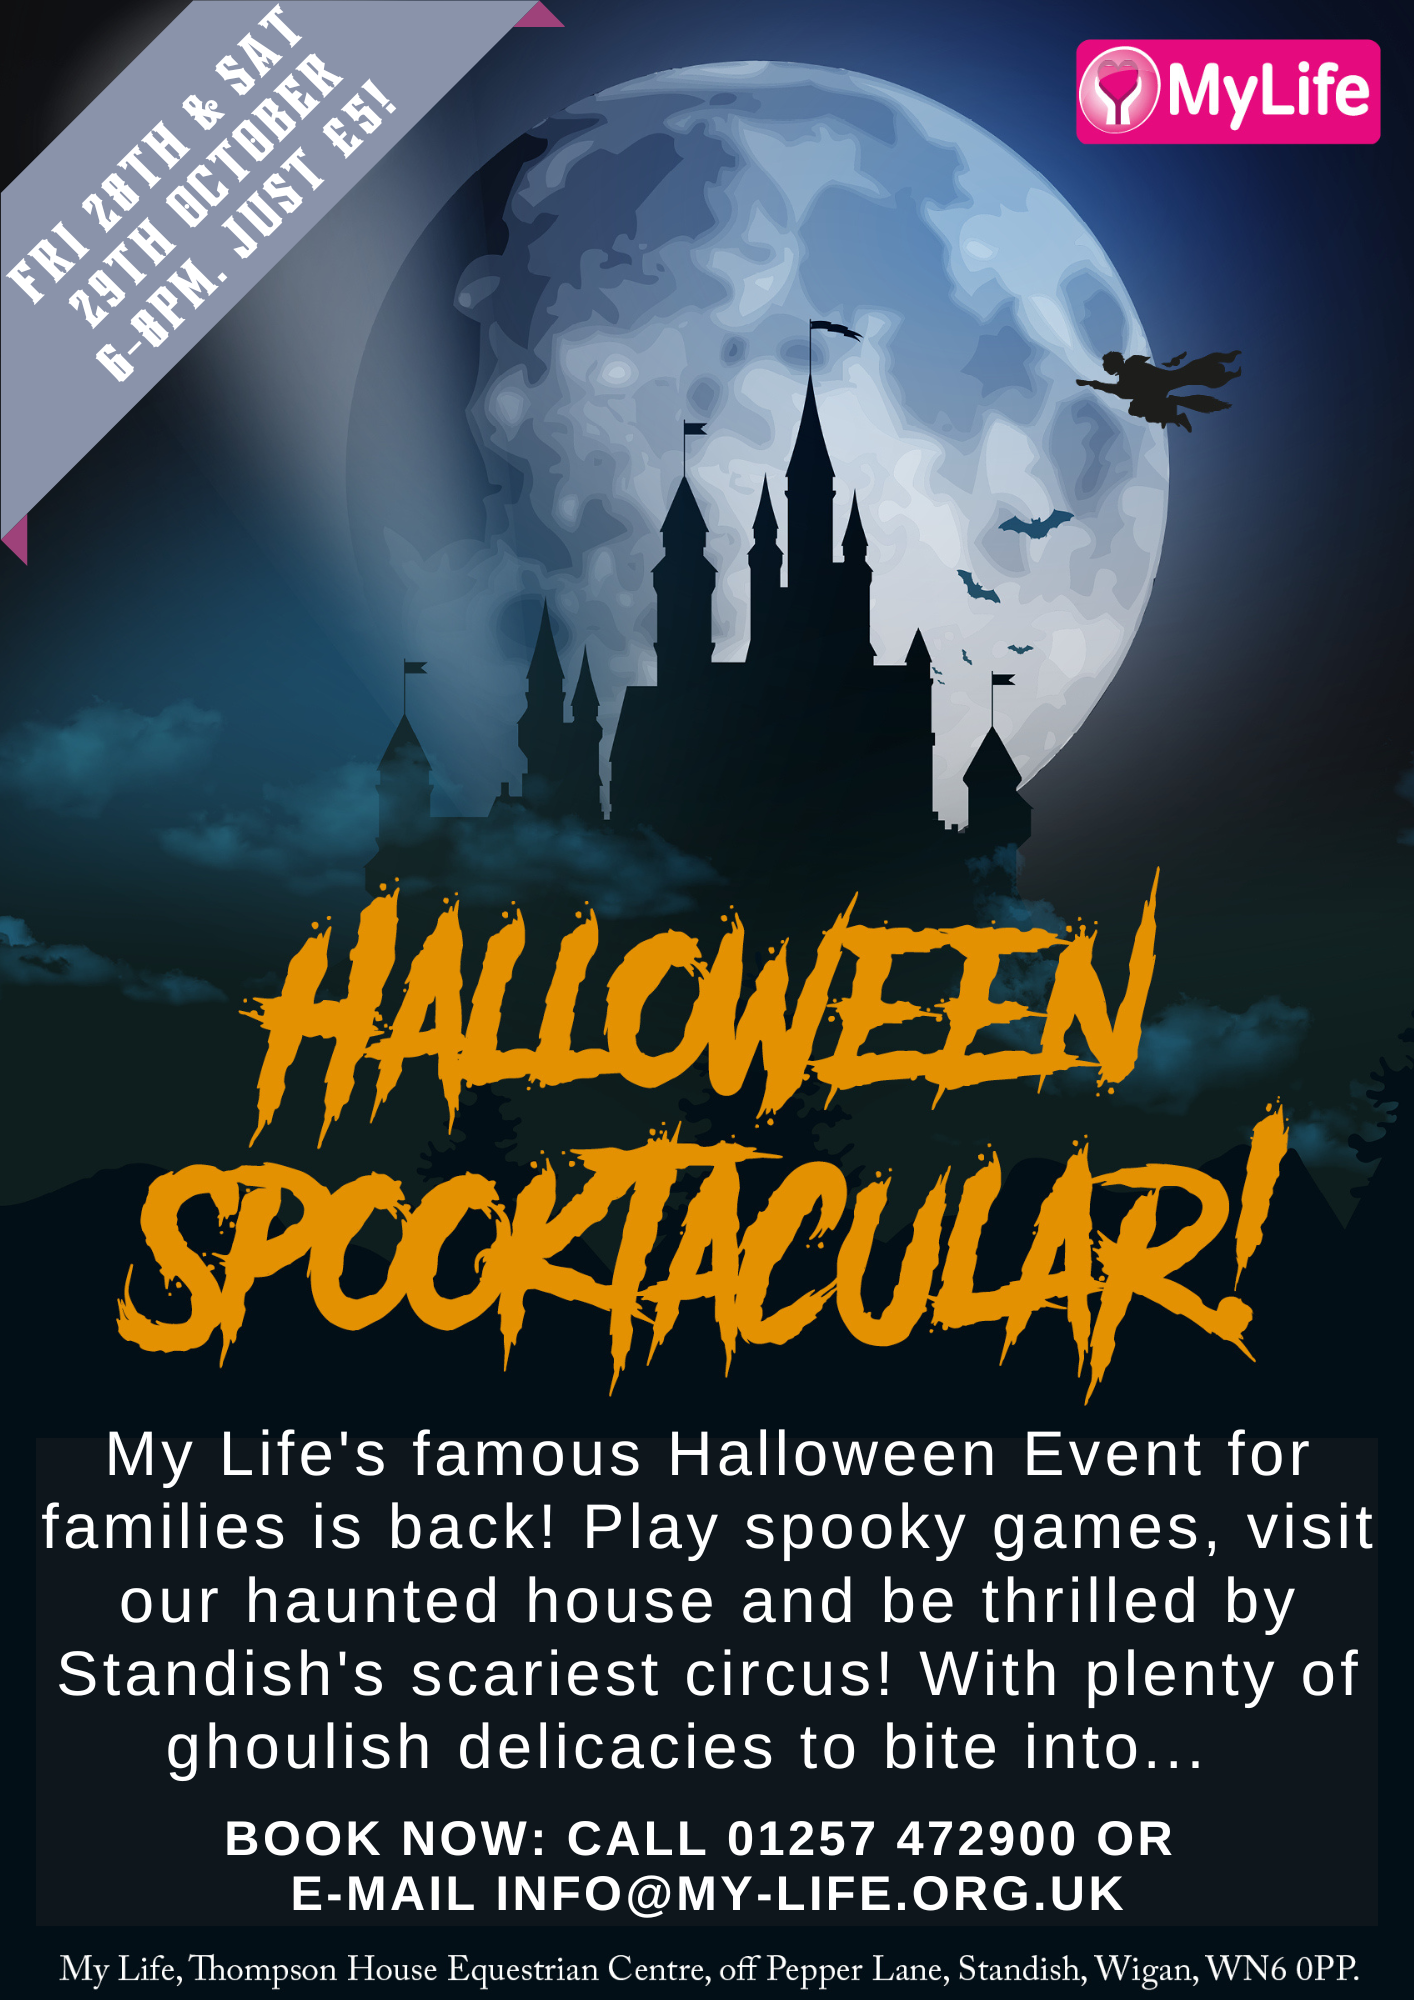 My Life’s Halloween Spooktacular is back!